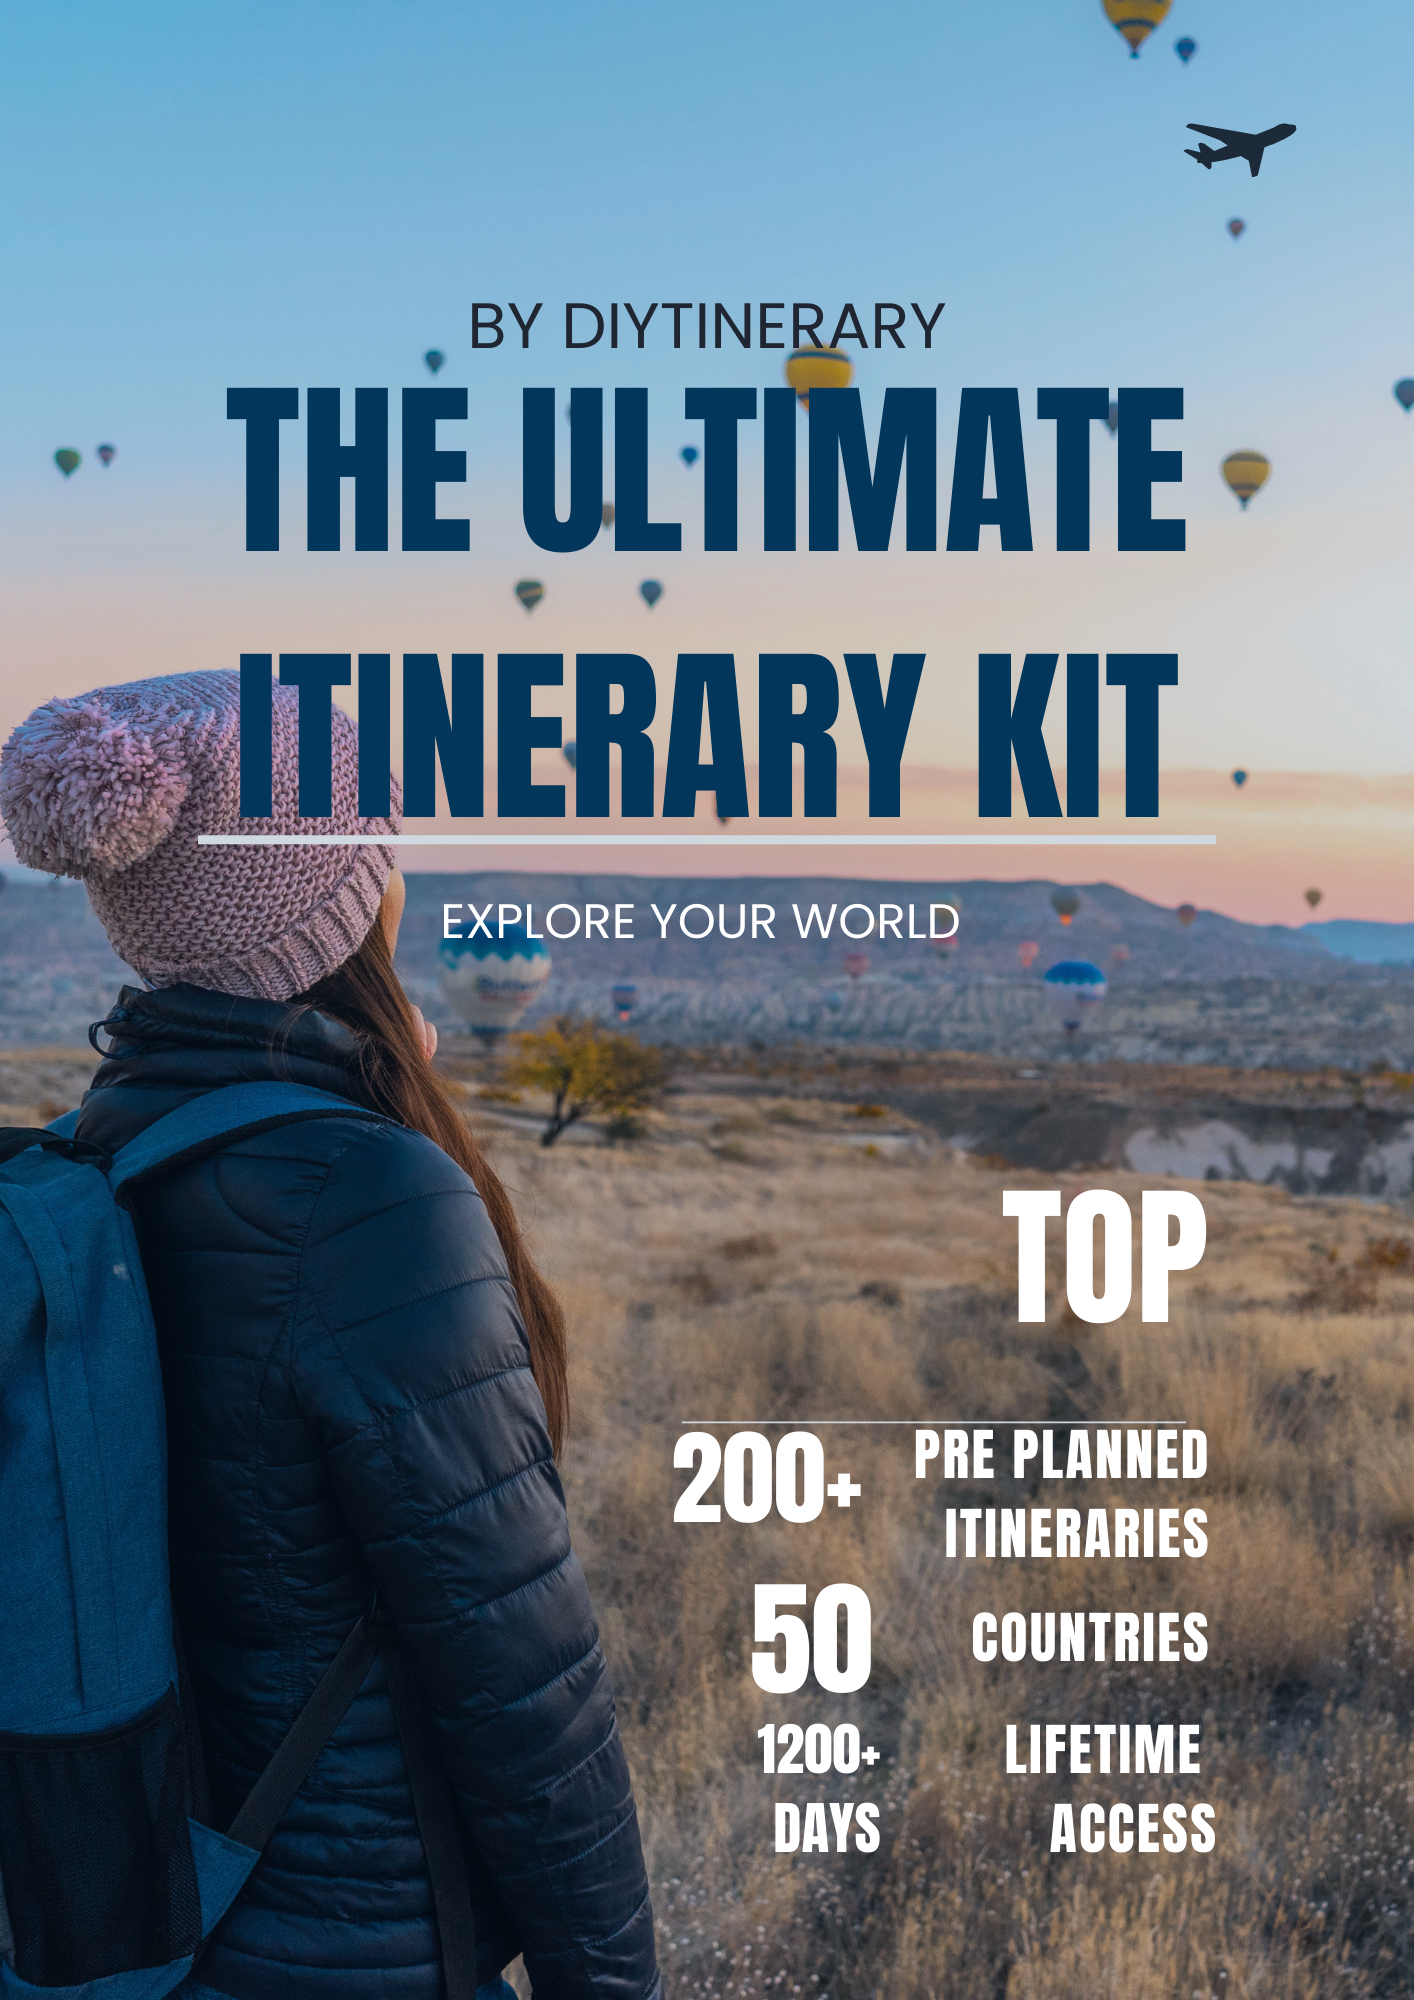 The Ultimate Itinerary Kit - DIYTINERARY